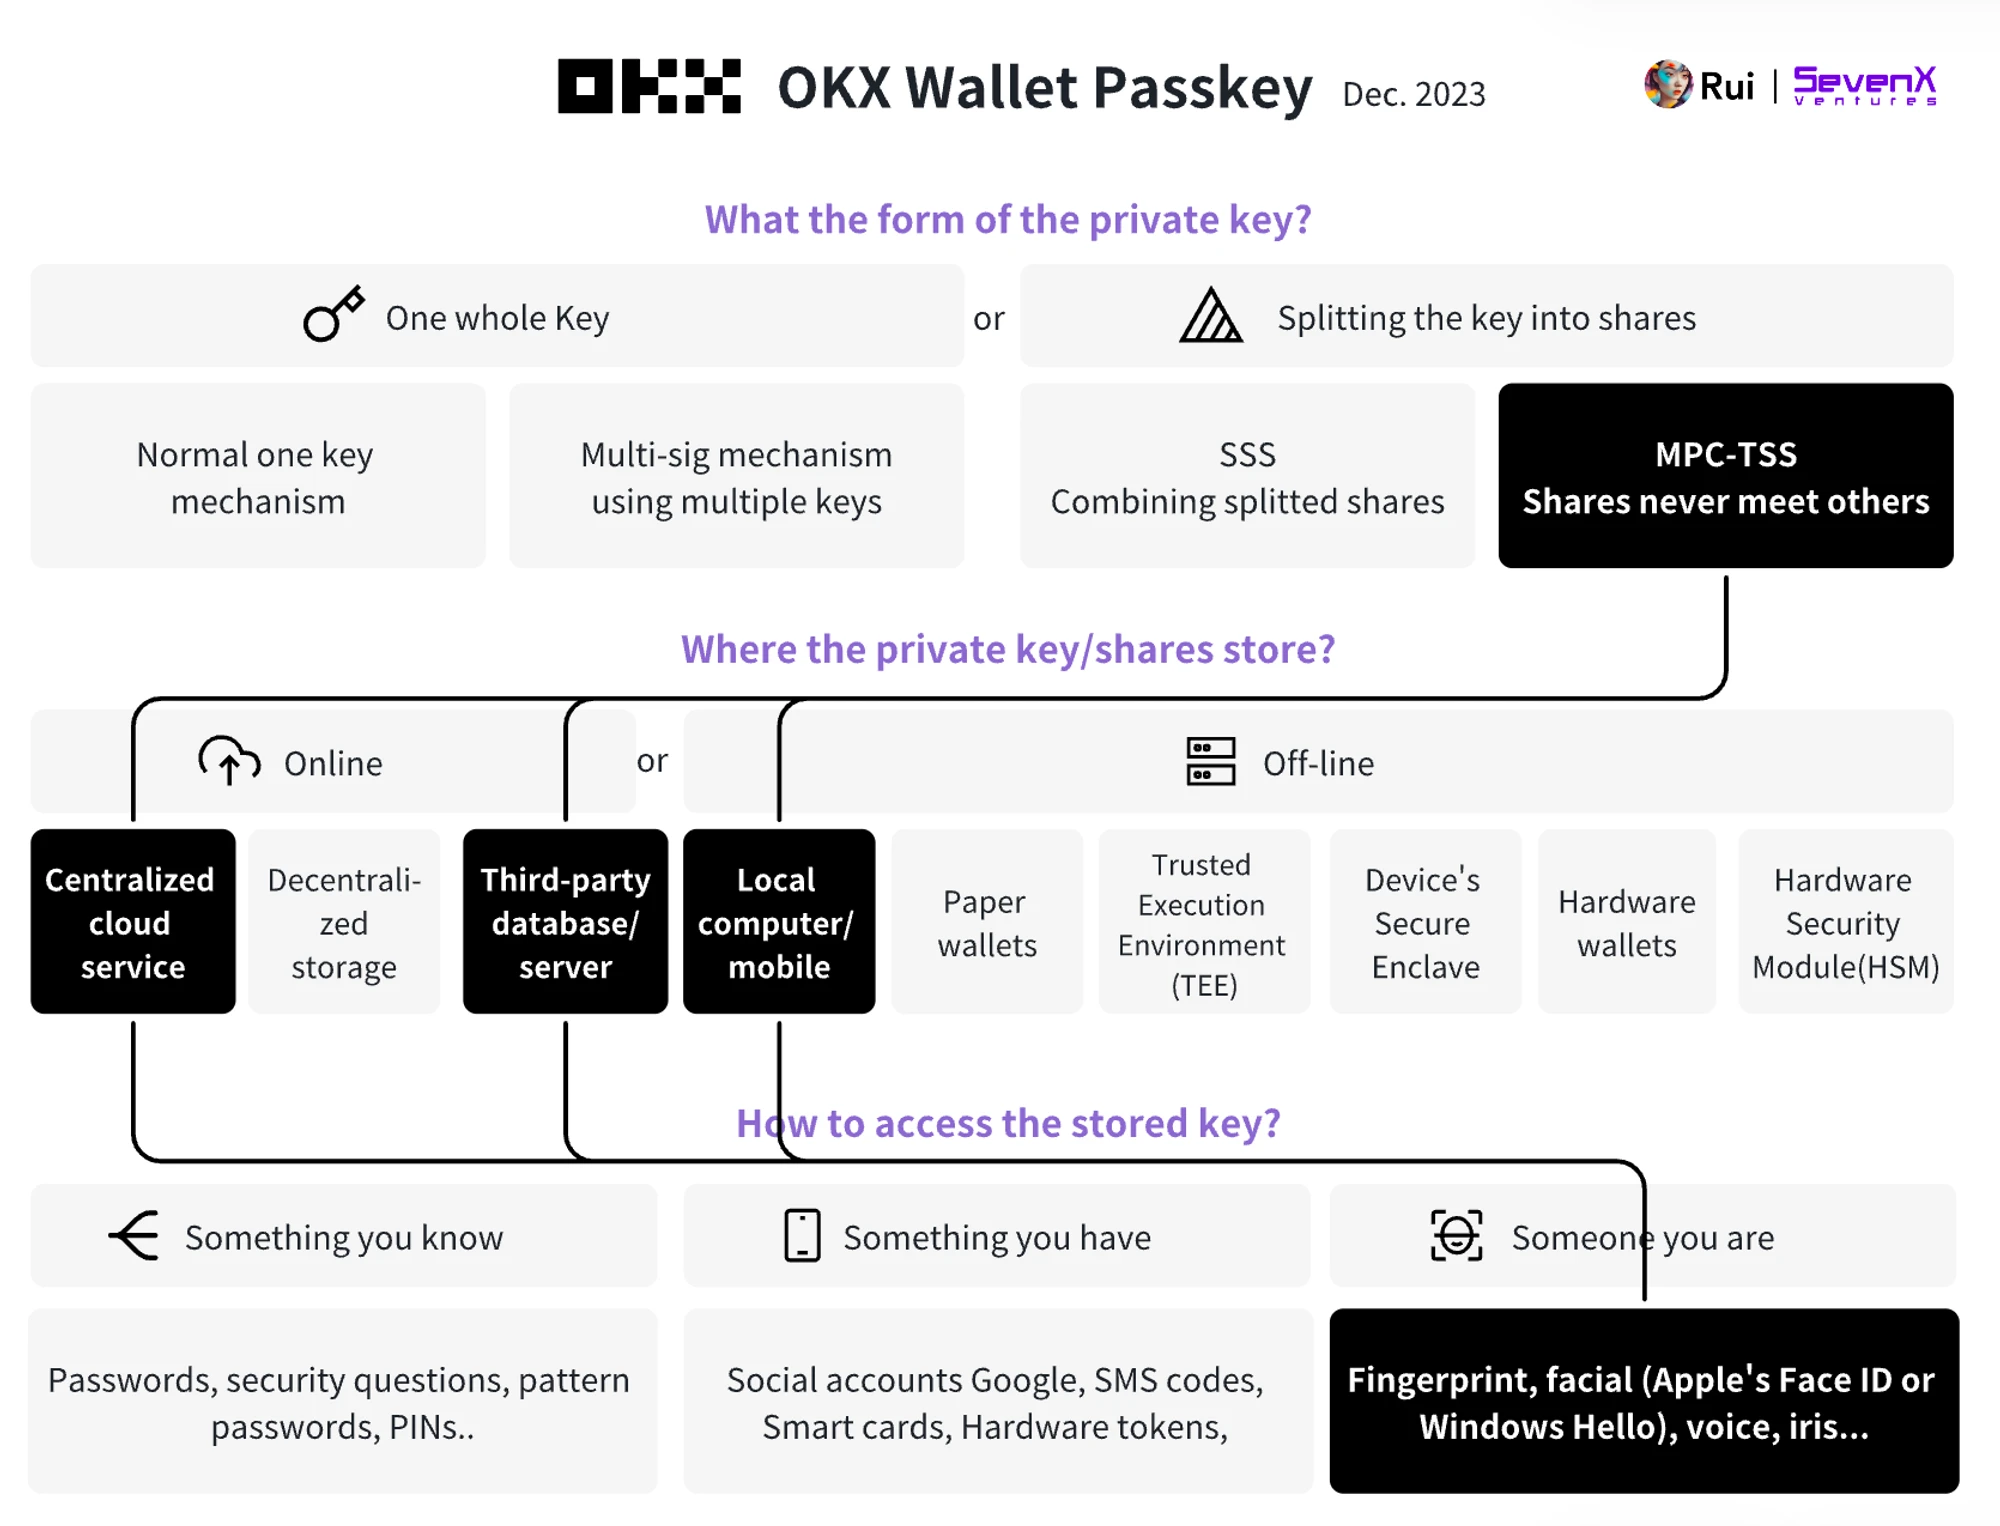 SevenX Ventures: WebAuthn 与 Passkey 如何拯救糟糕的加密体验？